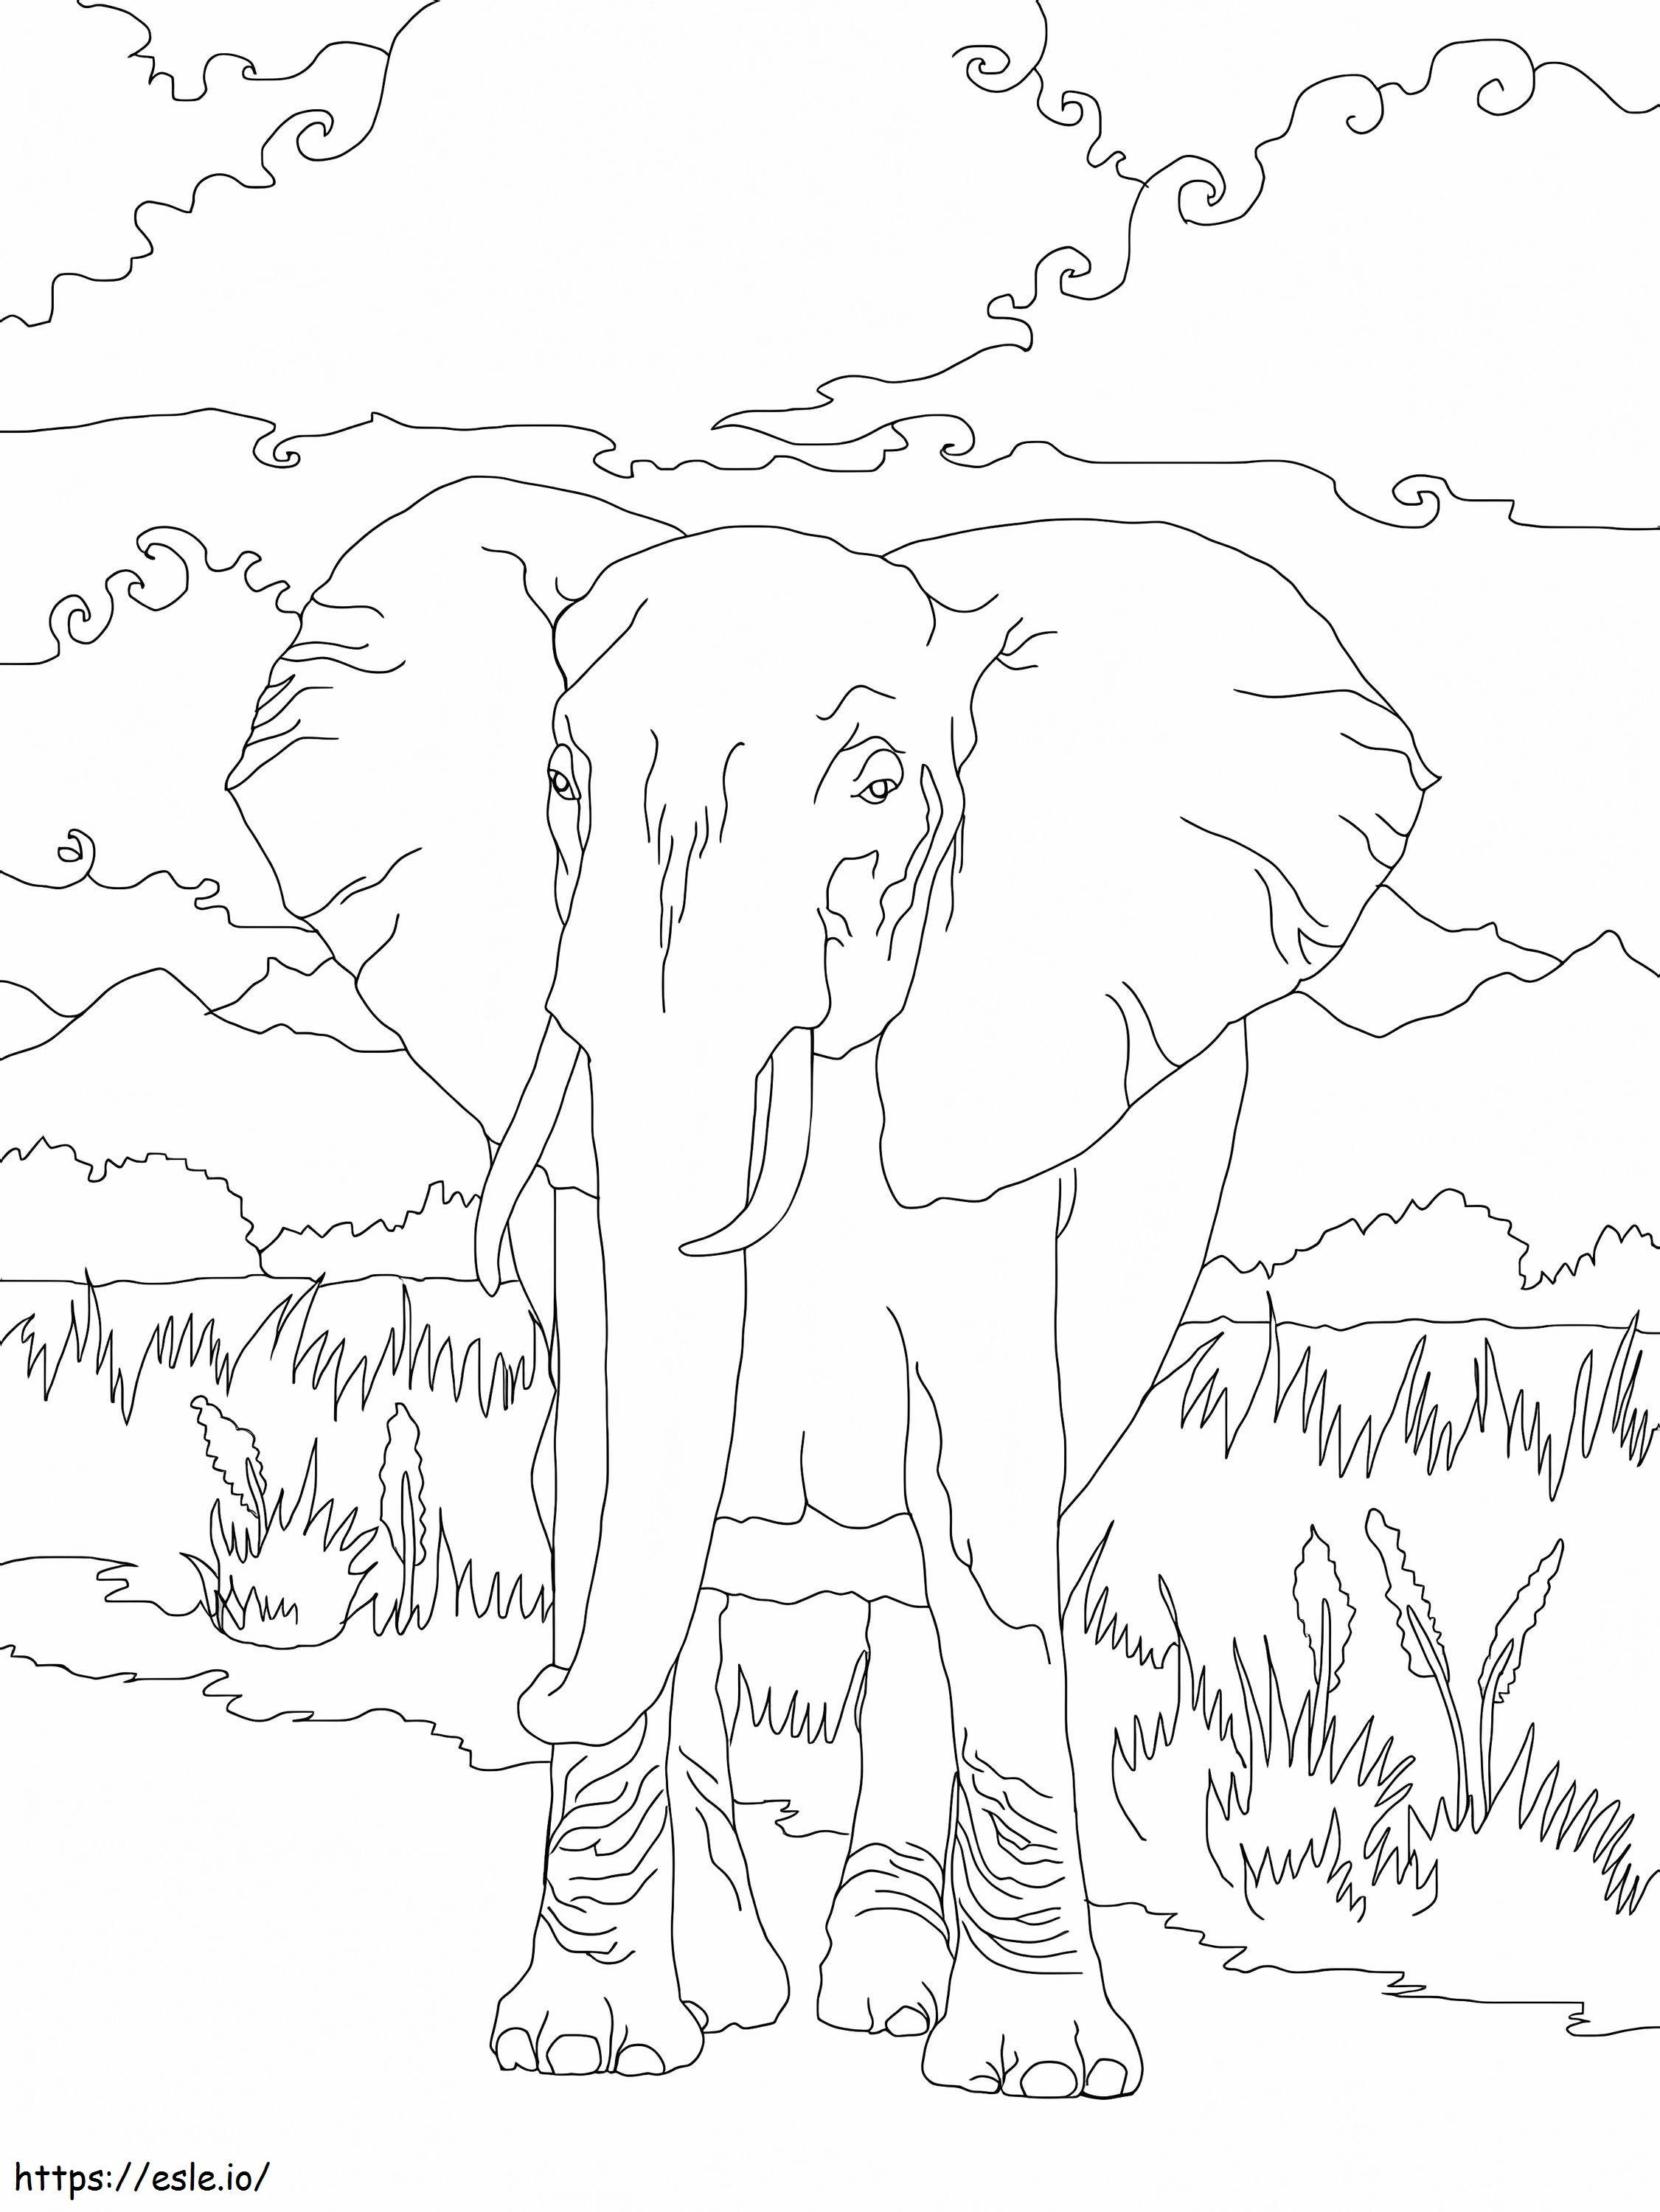 Elefante africano de sabana 1 para colorear